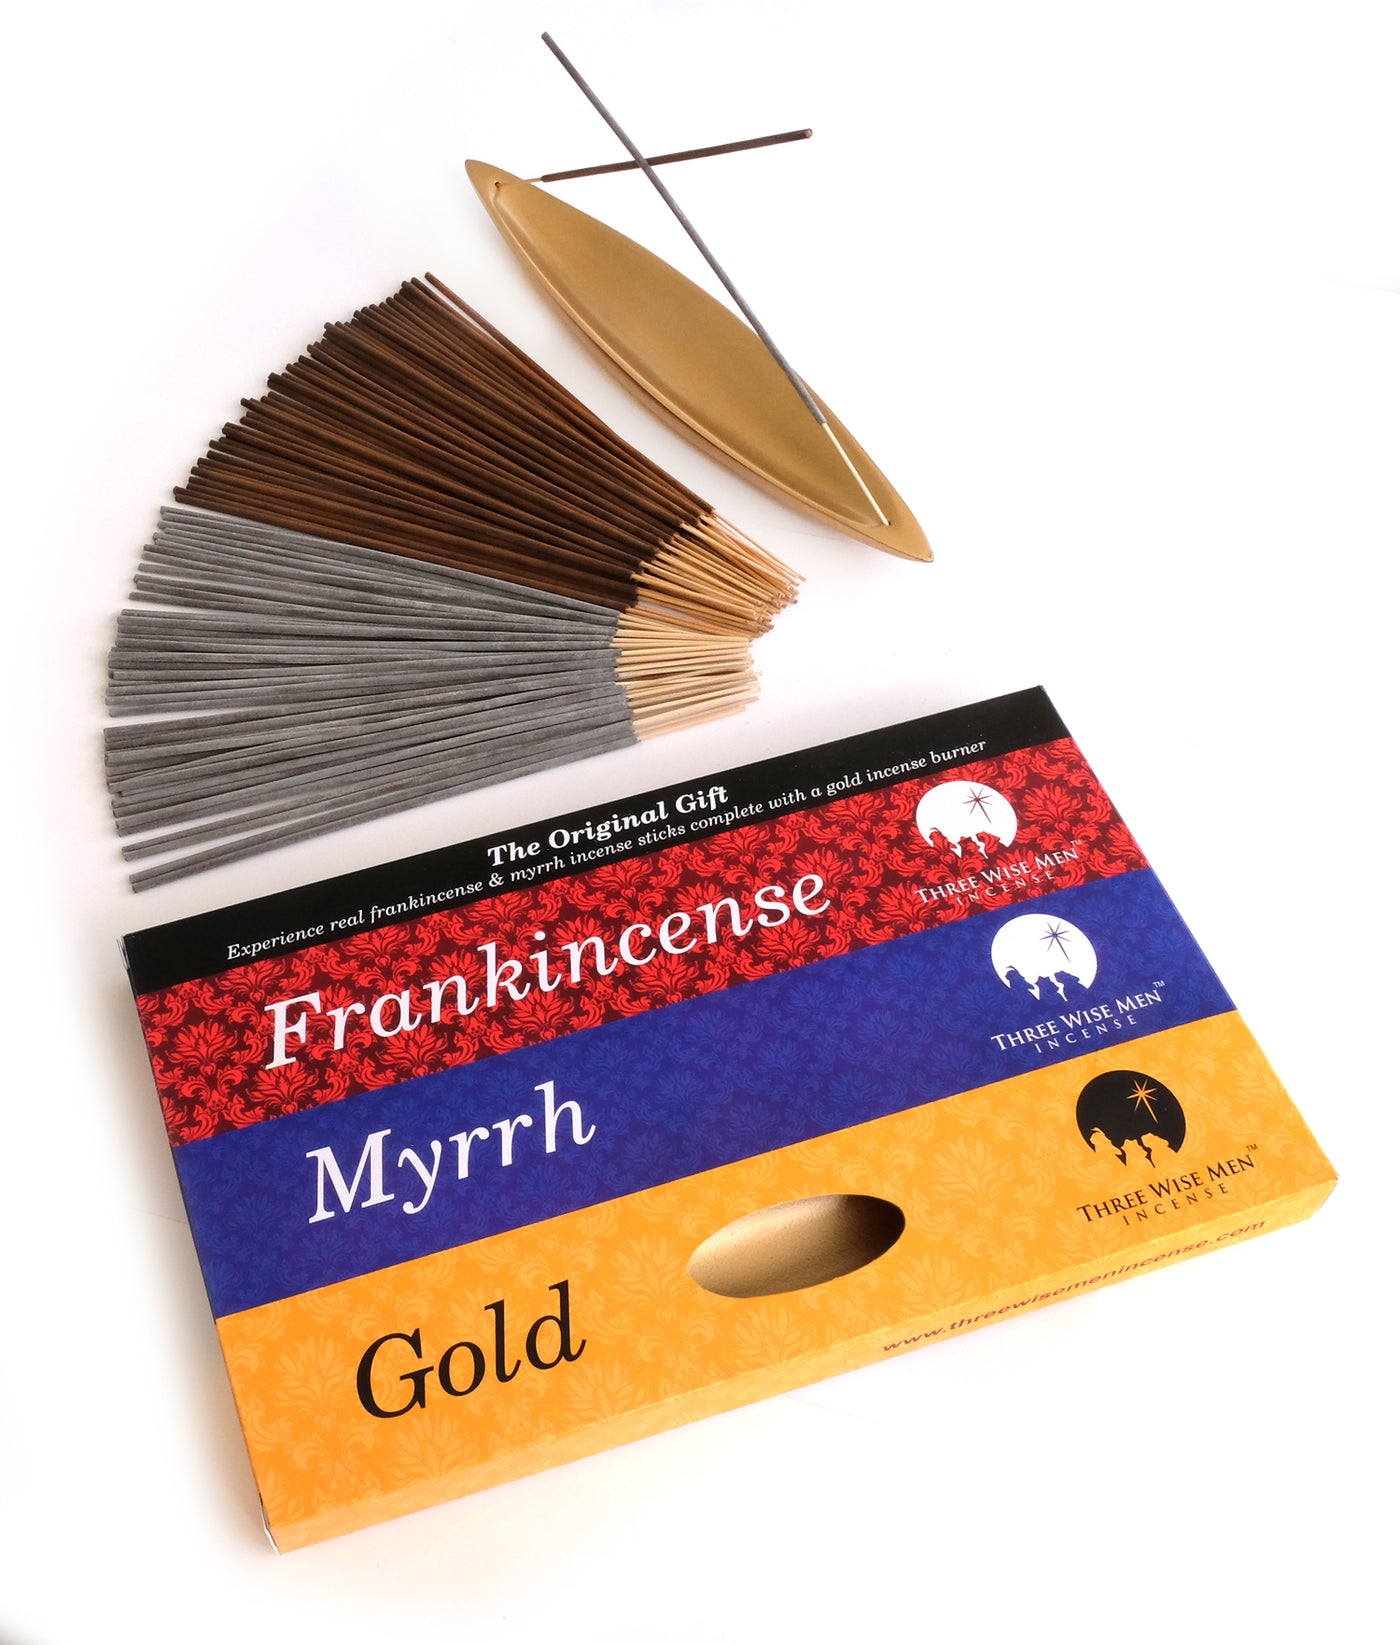 Frankincense, Myrrh & Gold The Original Gift by Three Wise Men Incense